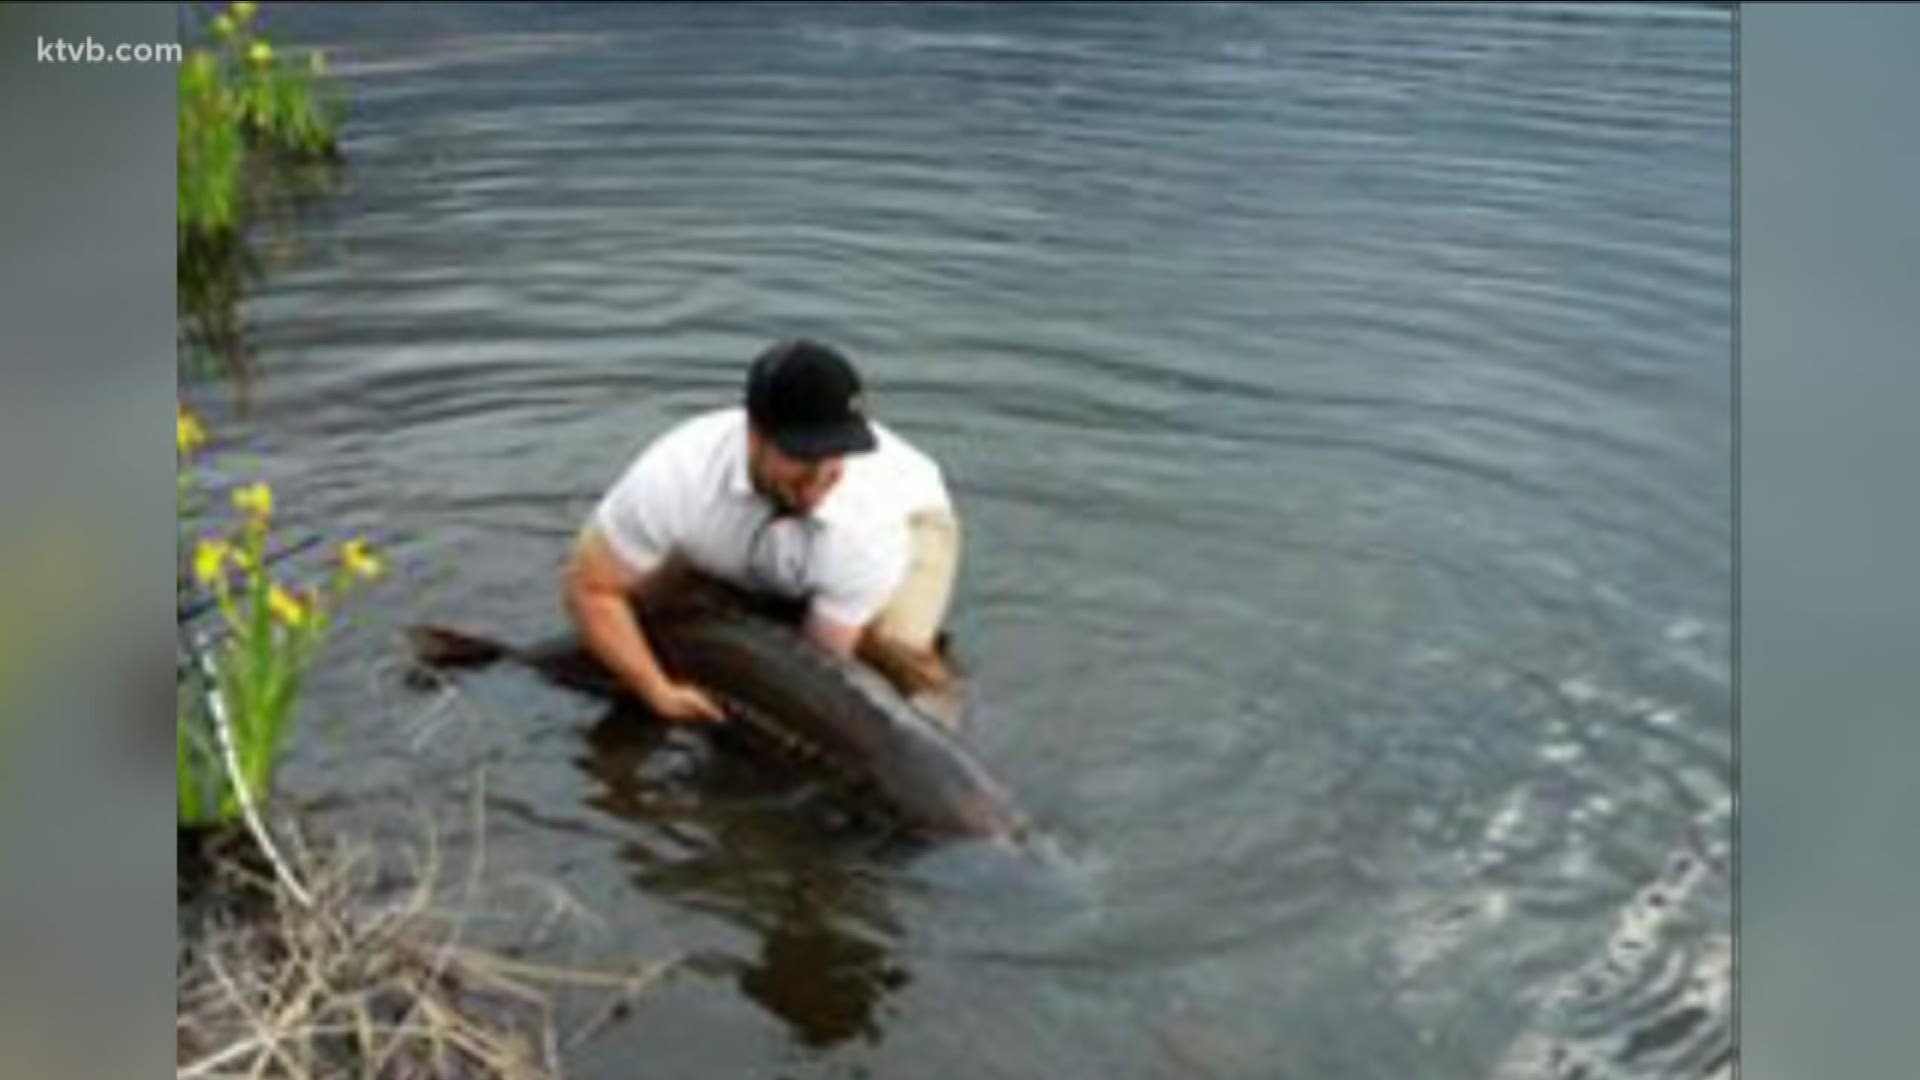 Ryan Peterson caught a 60-pound sturgeon in Parkcenter Pond.